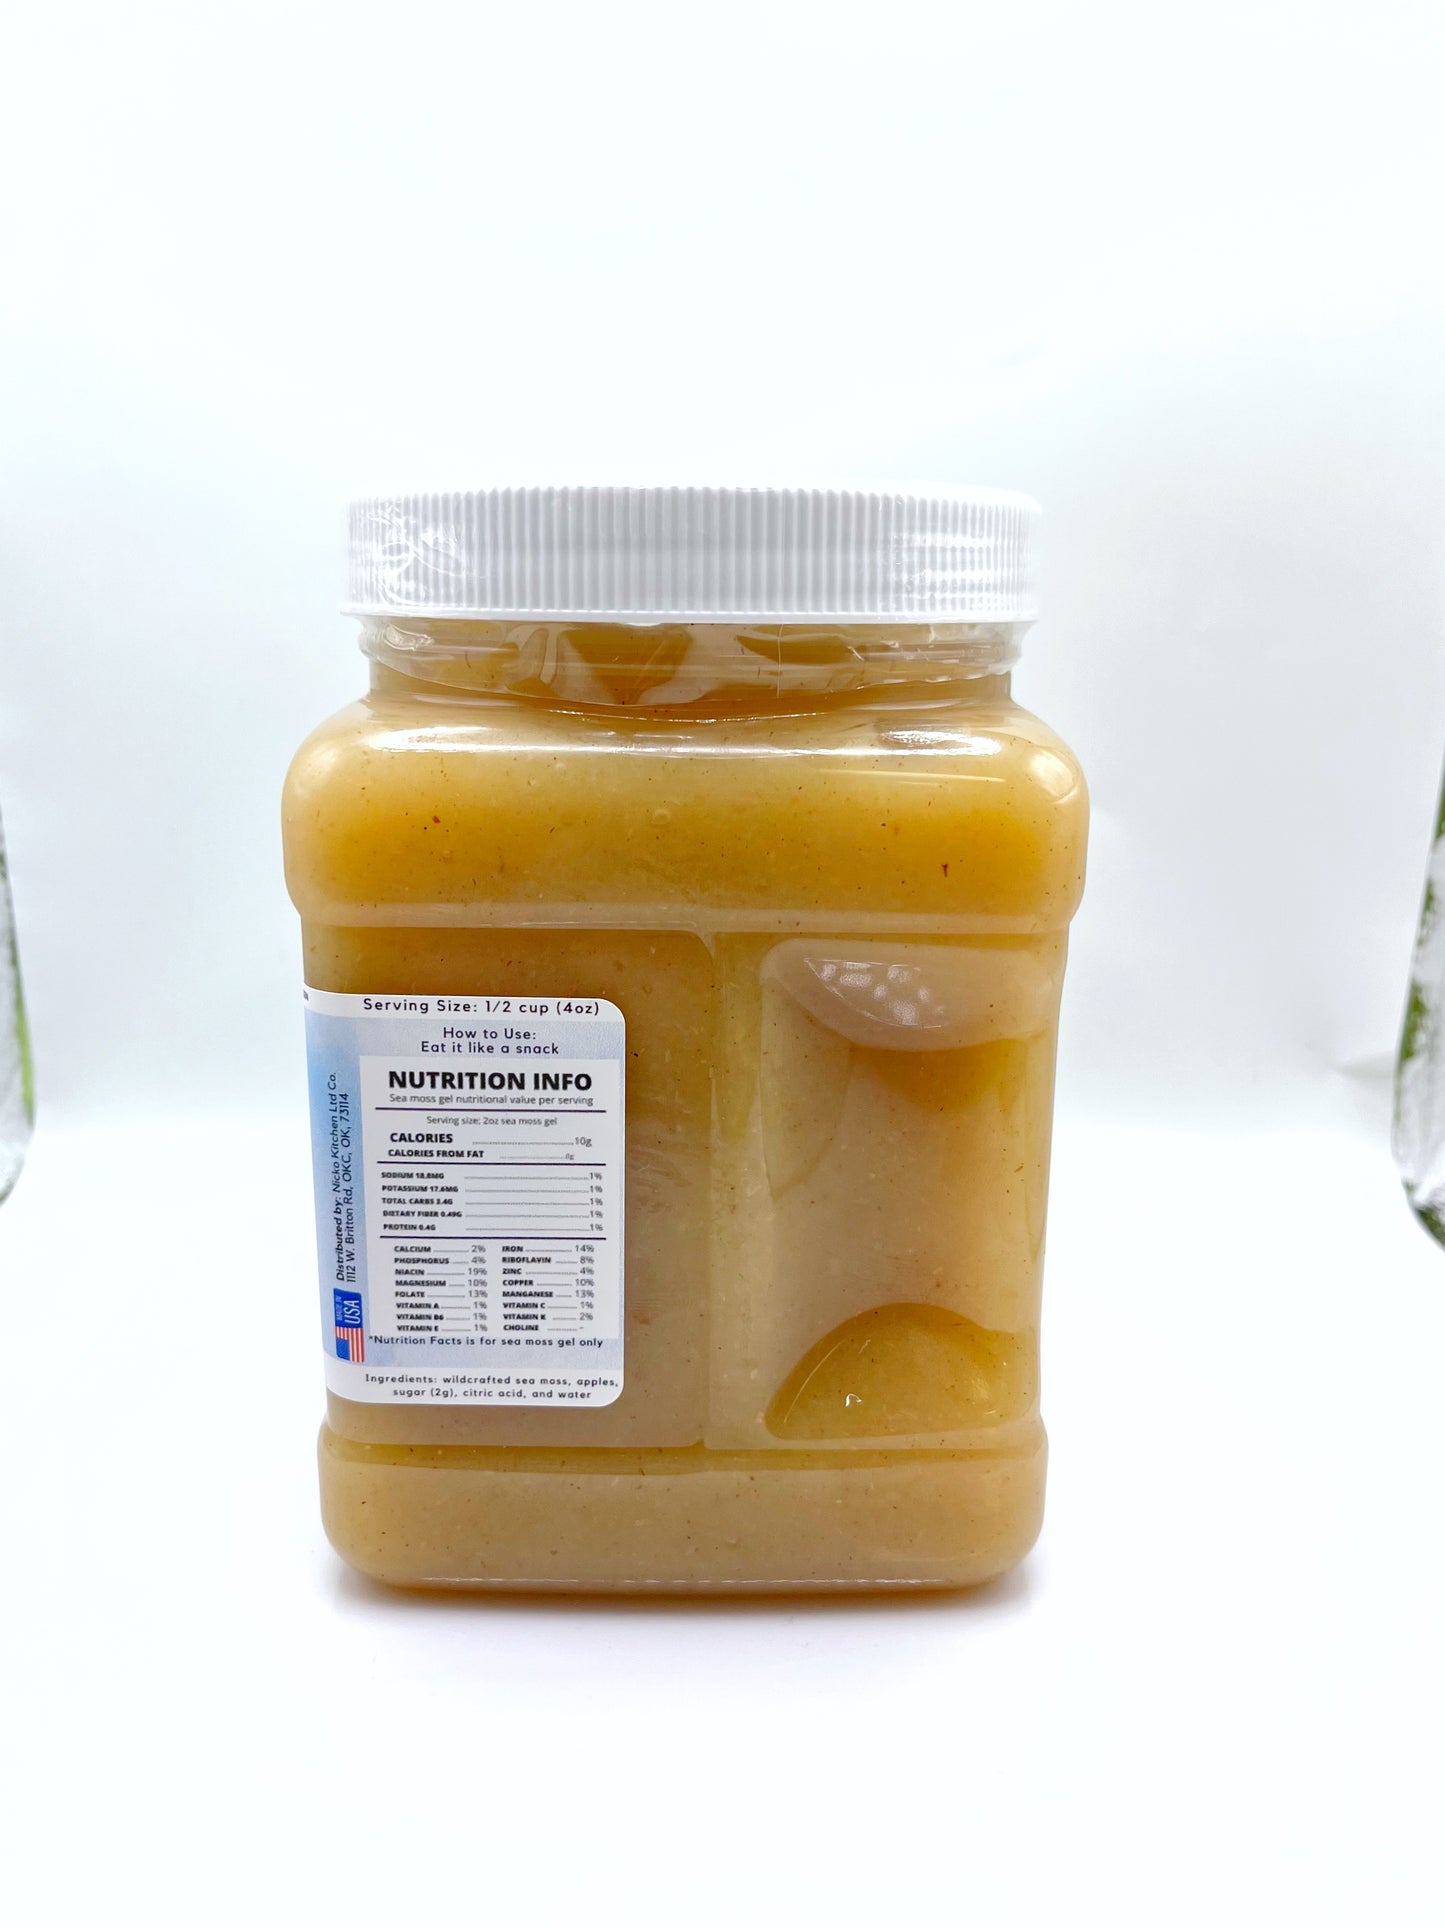 SuperSoss Sea Moss Gel Applesauce Snack | 32 oz Jar |  Recurring Delivery